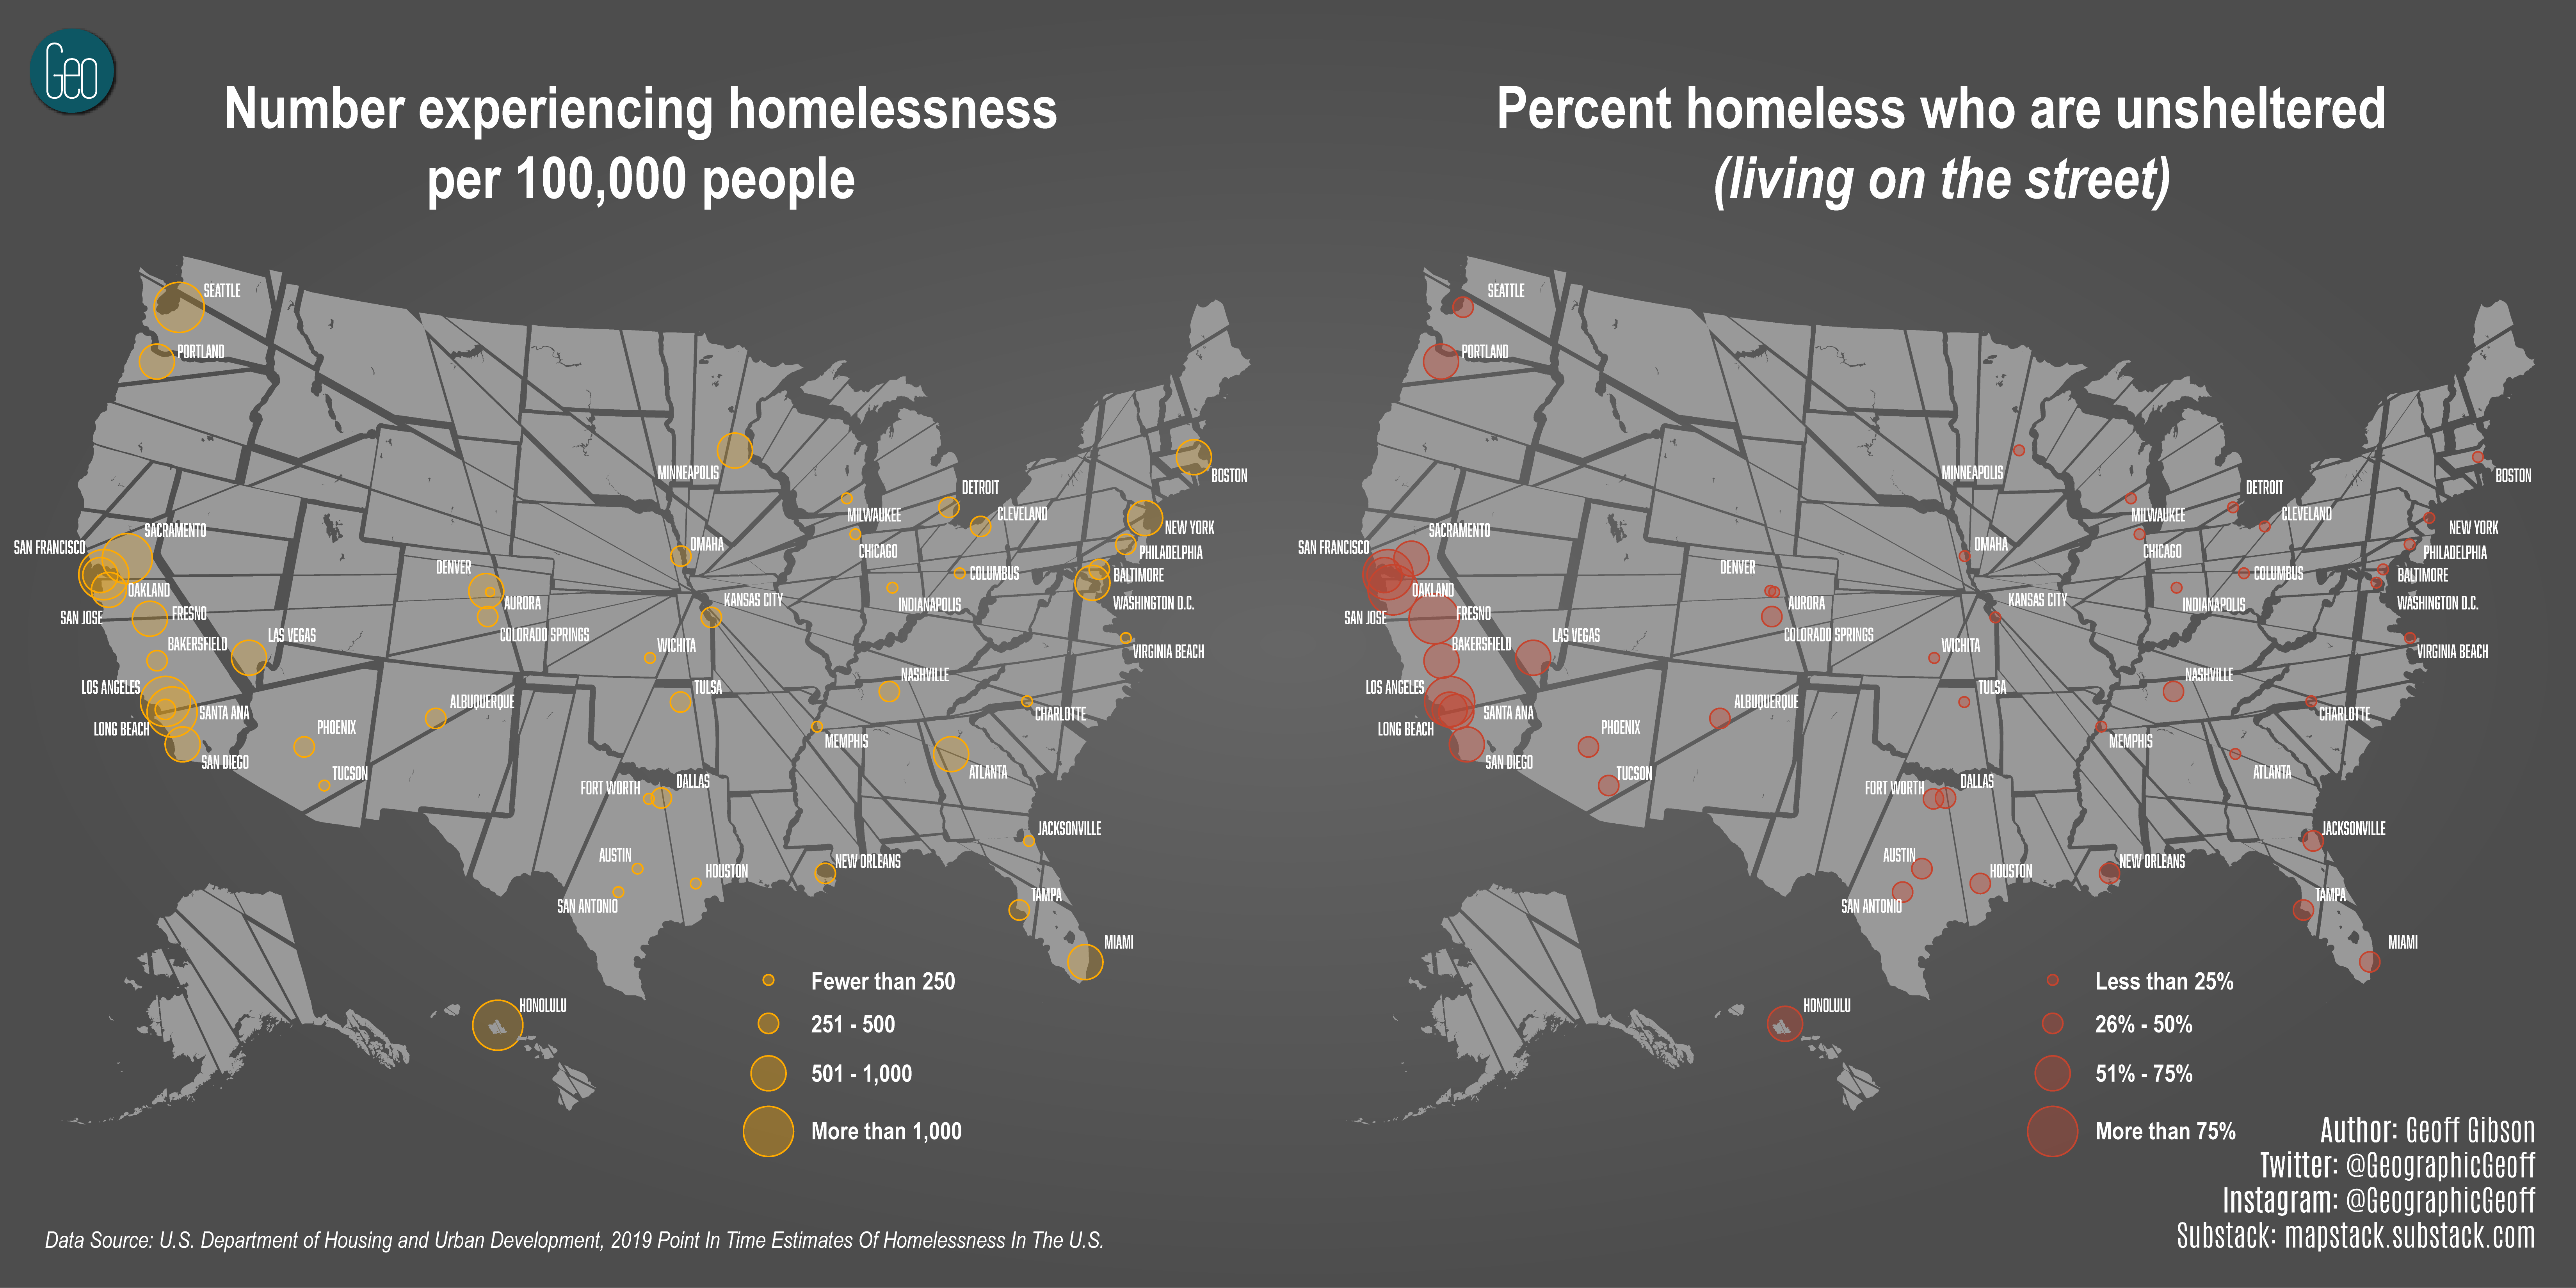 The U.S. Homeless Population Mapped Vivid Maps